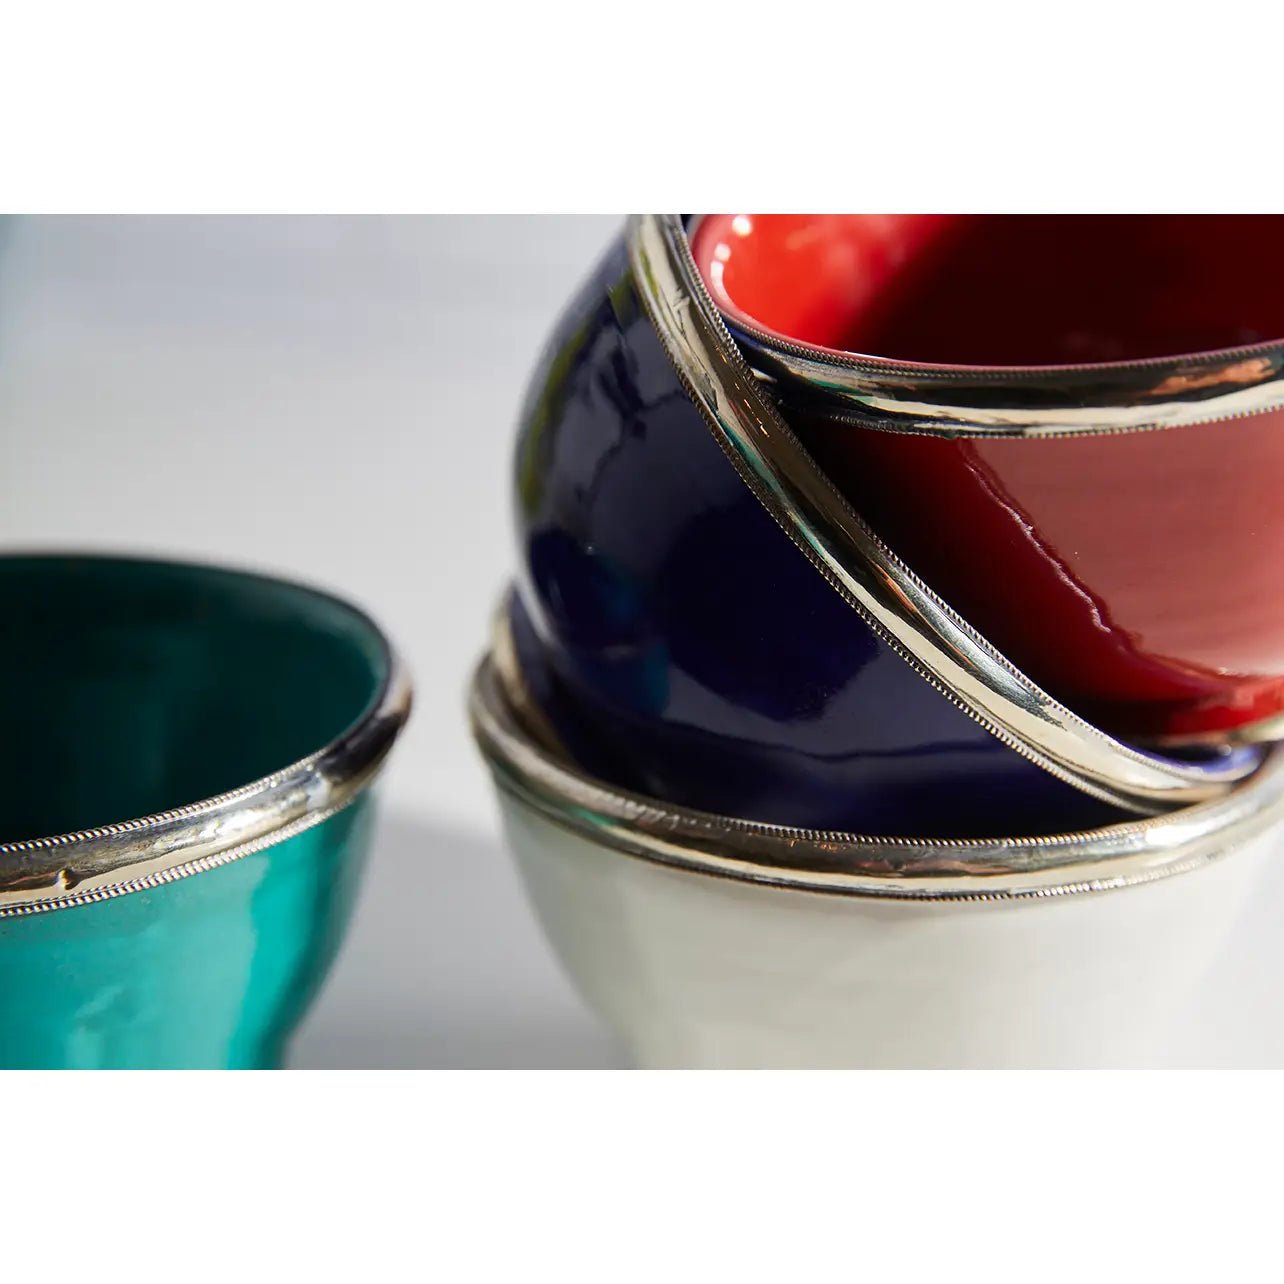 Moroccan Glazed Bowls with Berbe Silver Trim | Sudha's Emporium